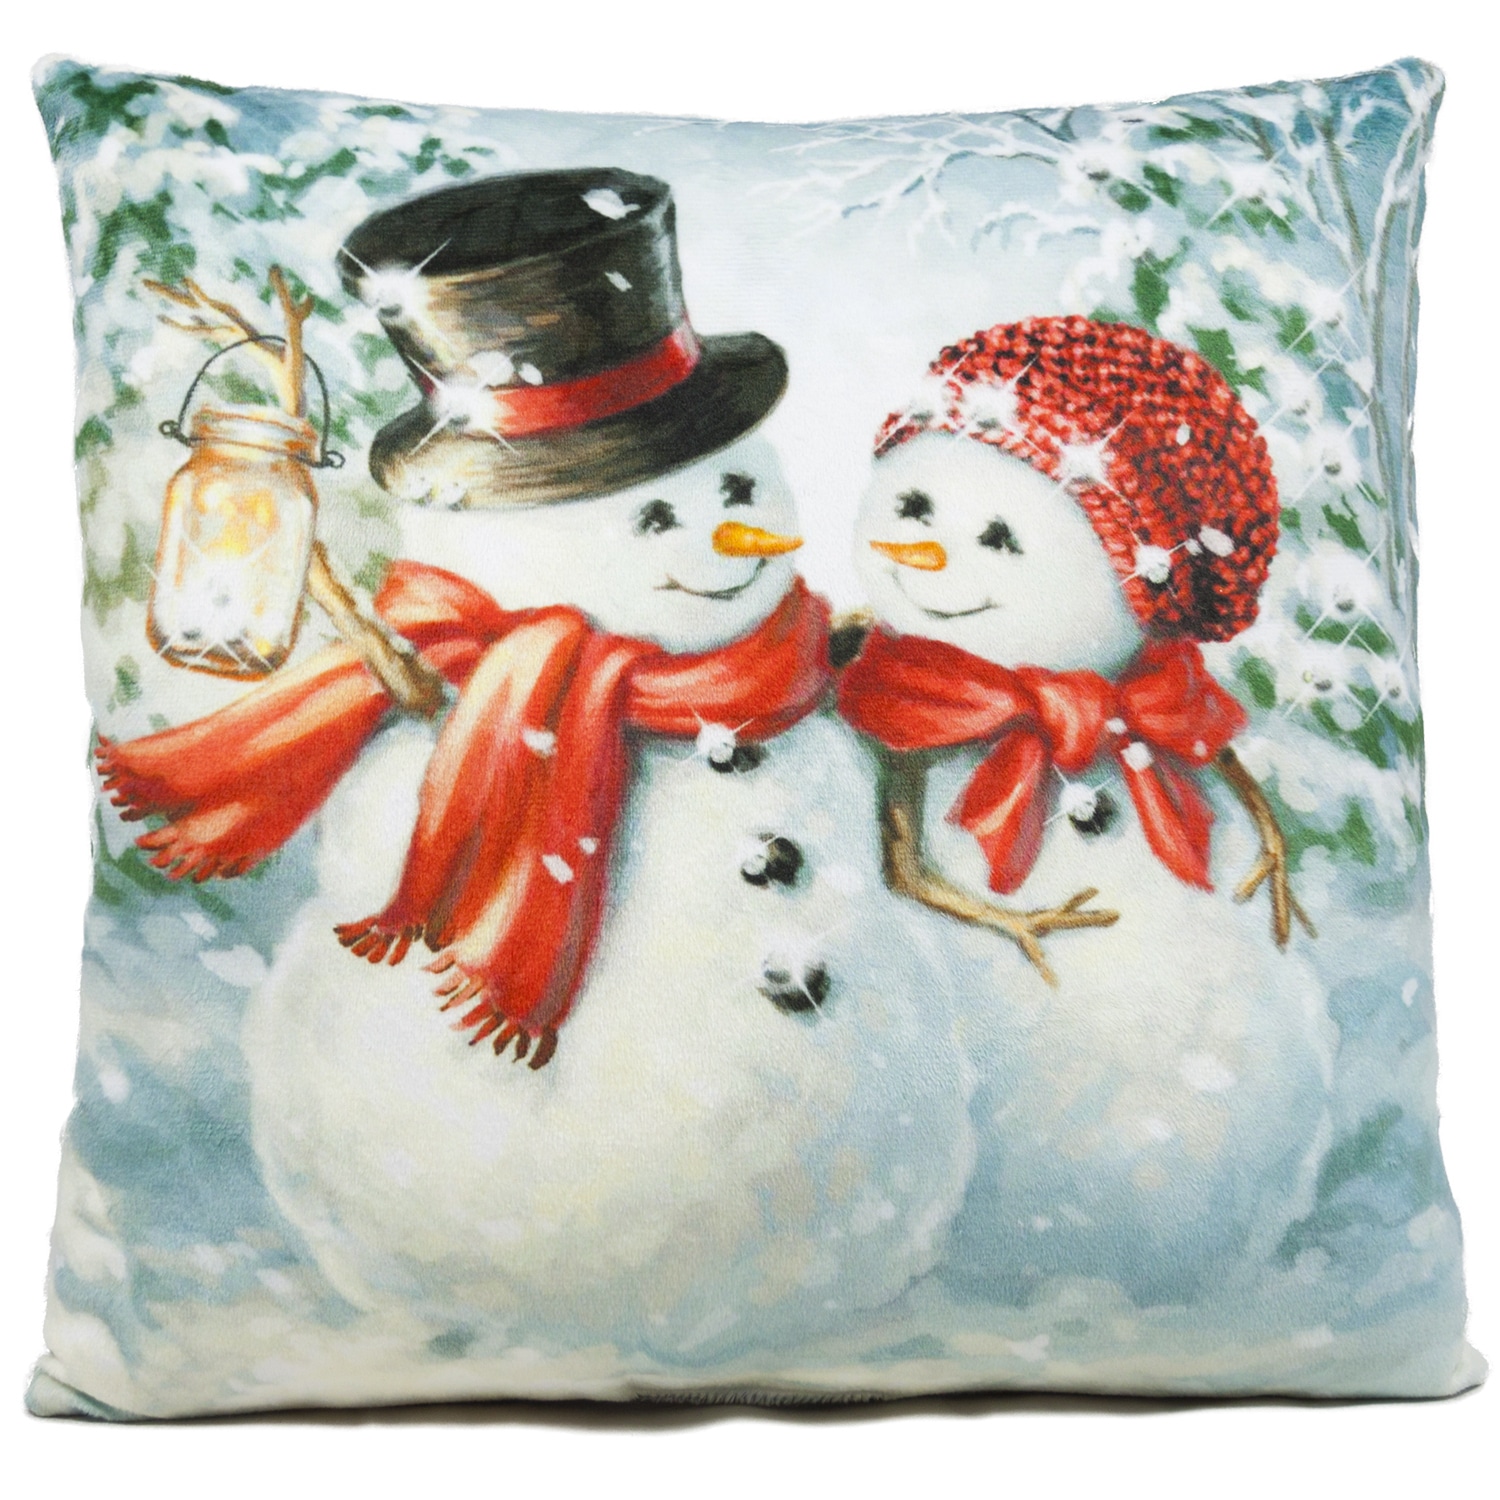 Christmas pillow with snowmen